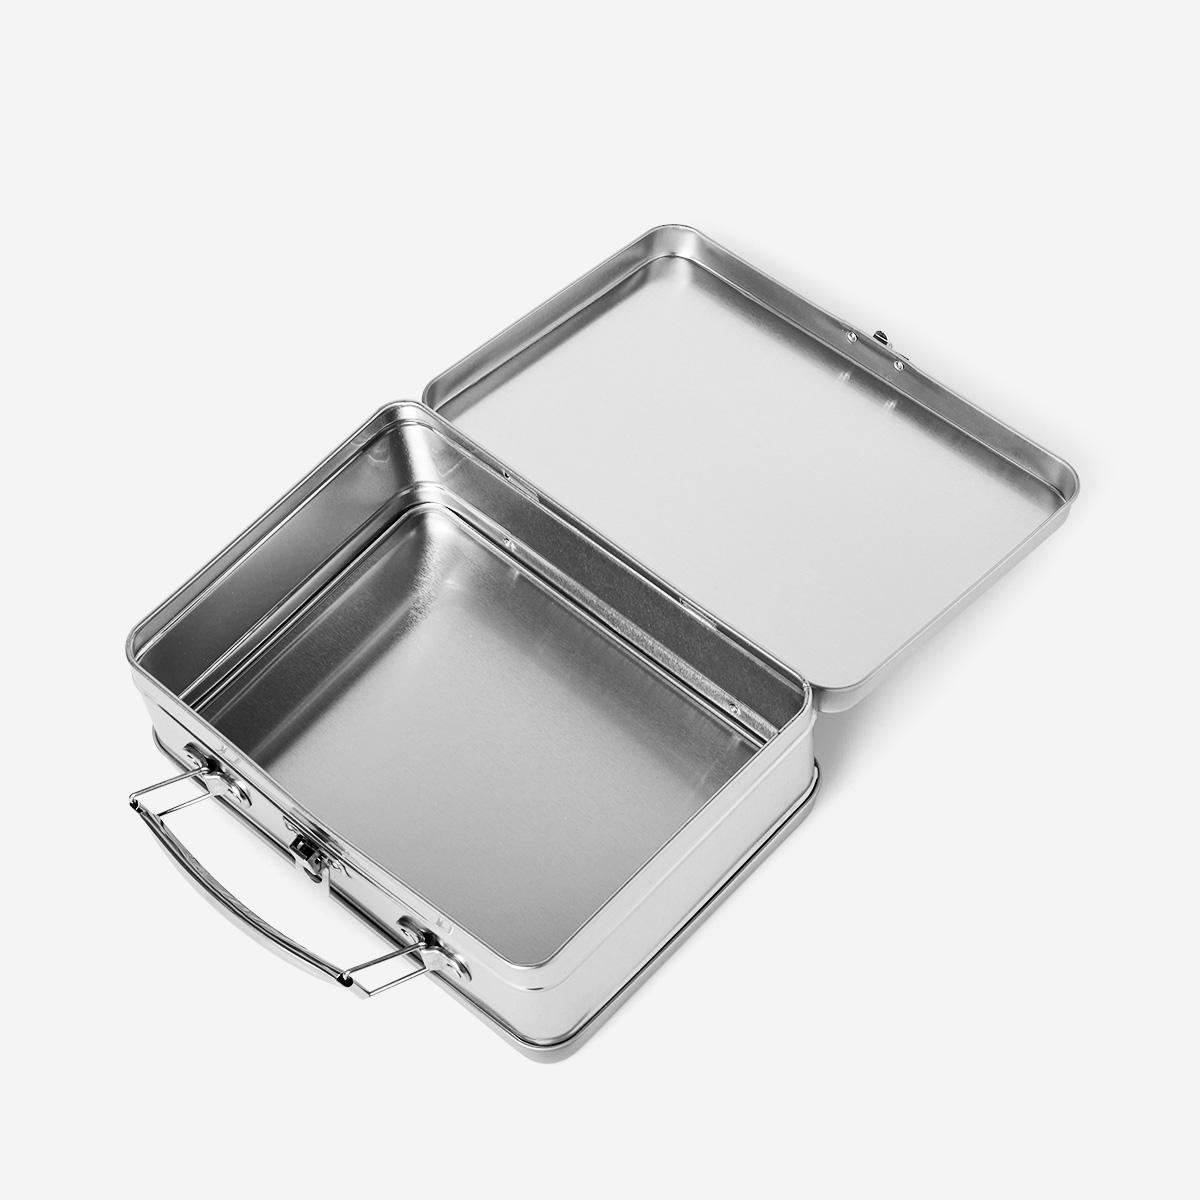 Silver metal lunch box. 26 cm